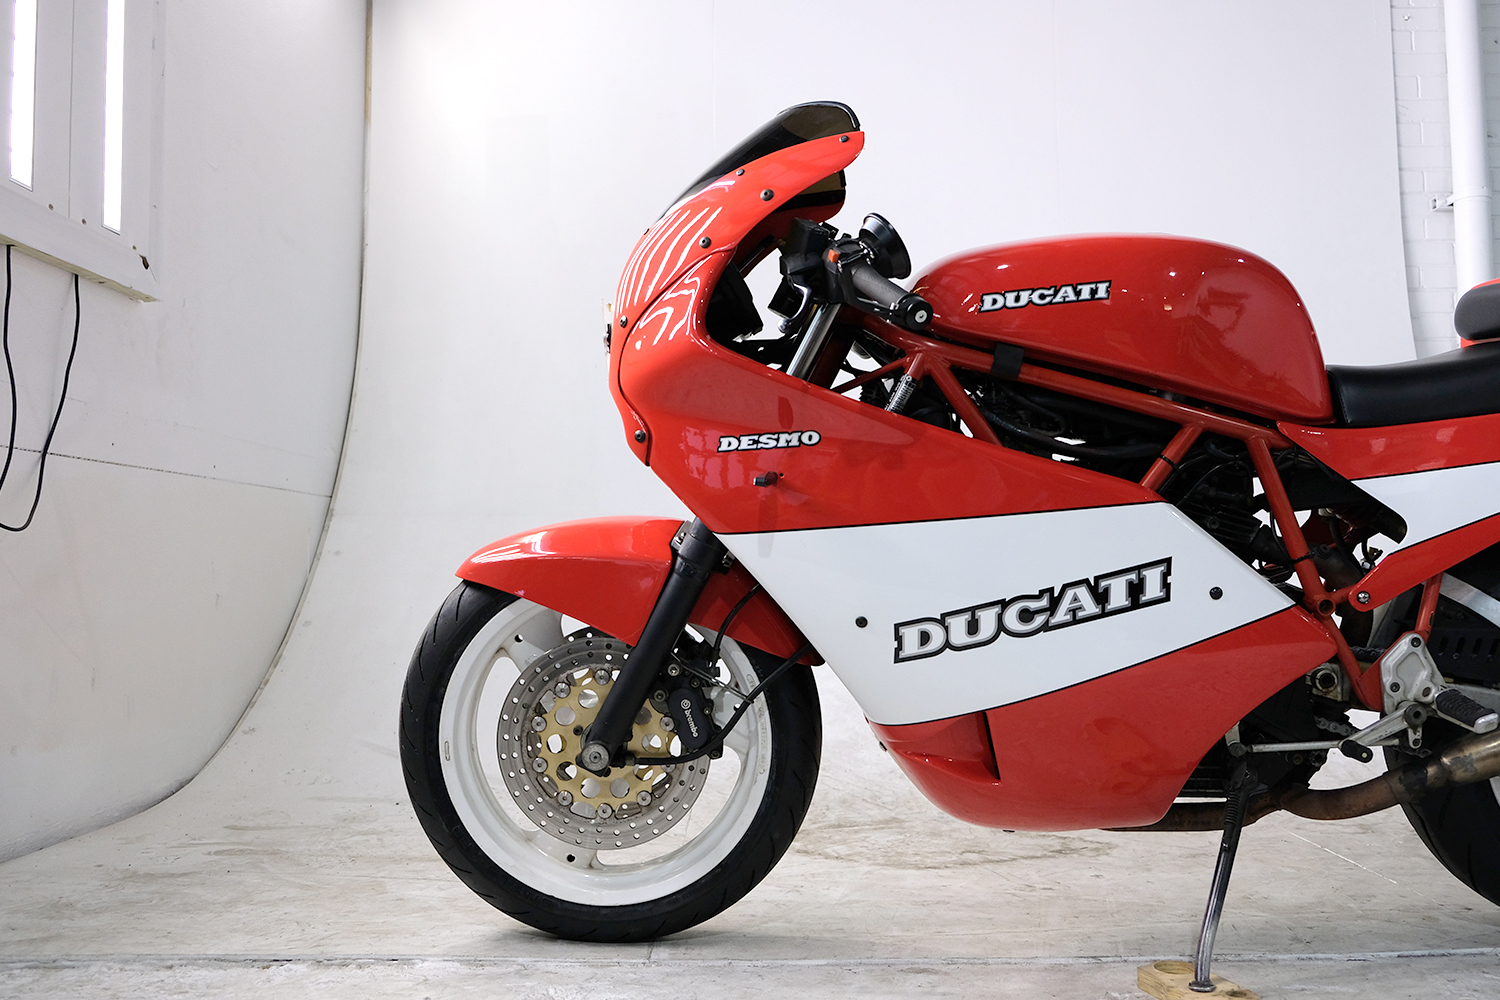 Ducati Desmo_0026_DSCF1462.jpg